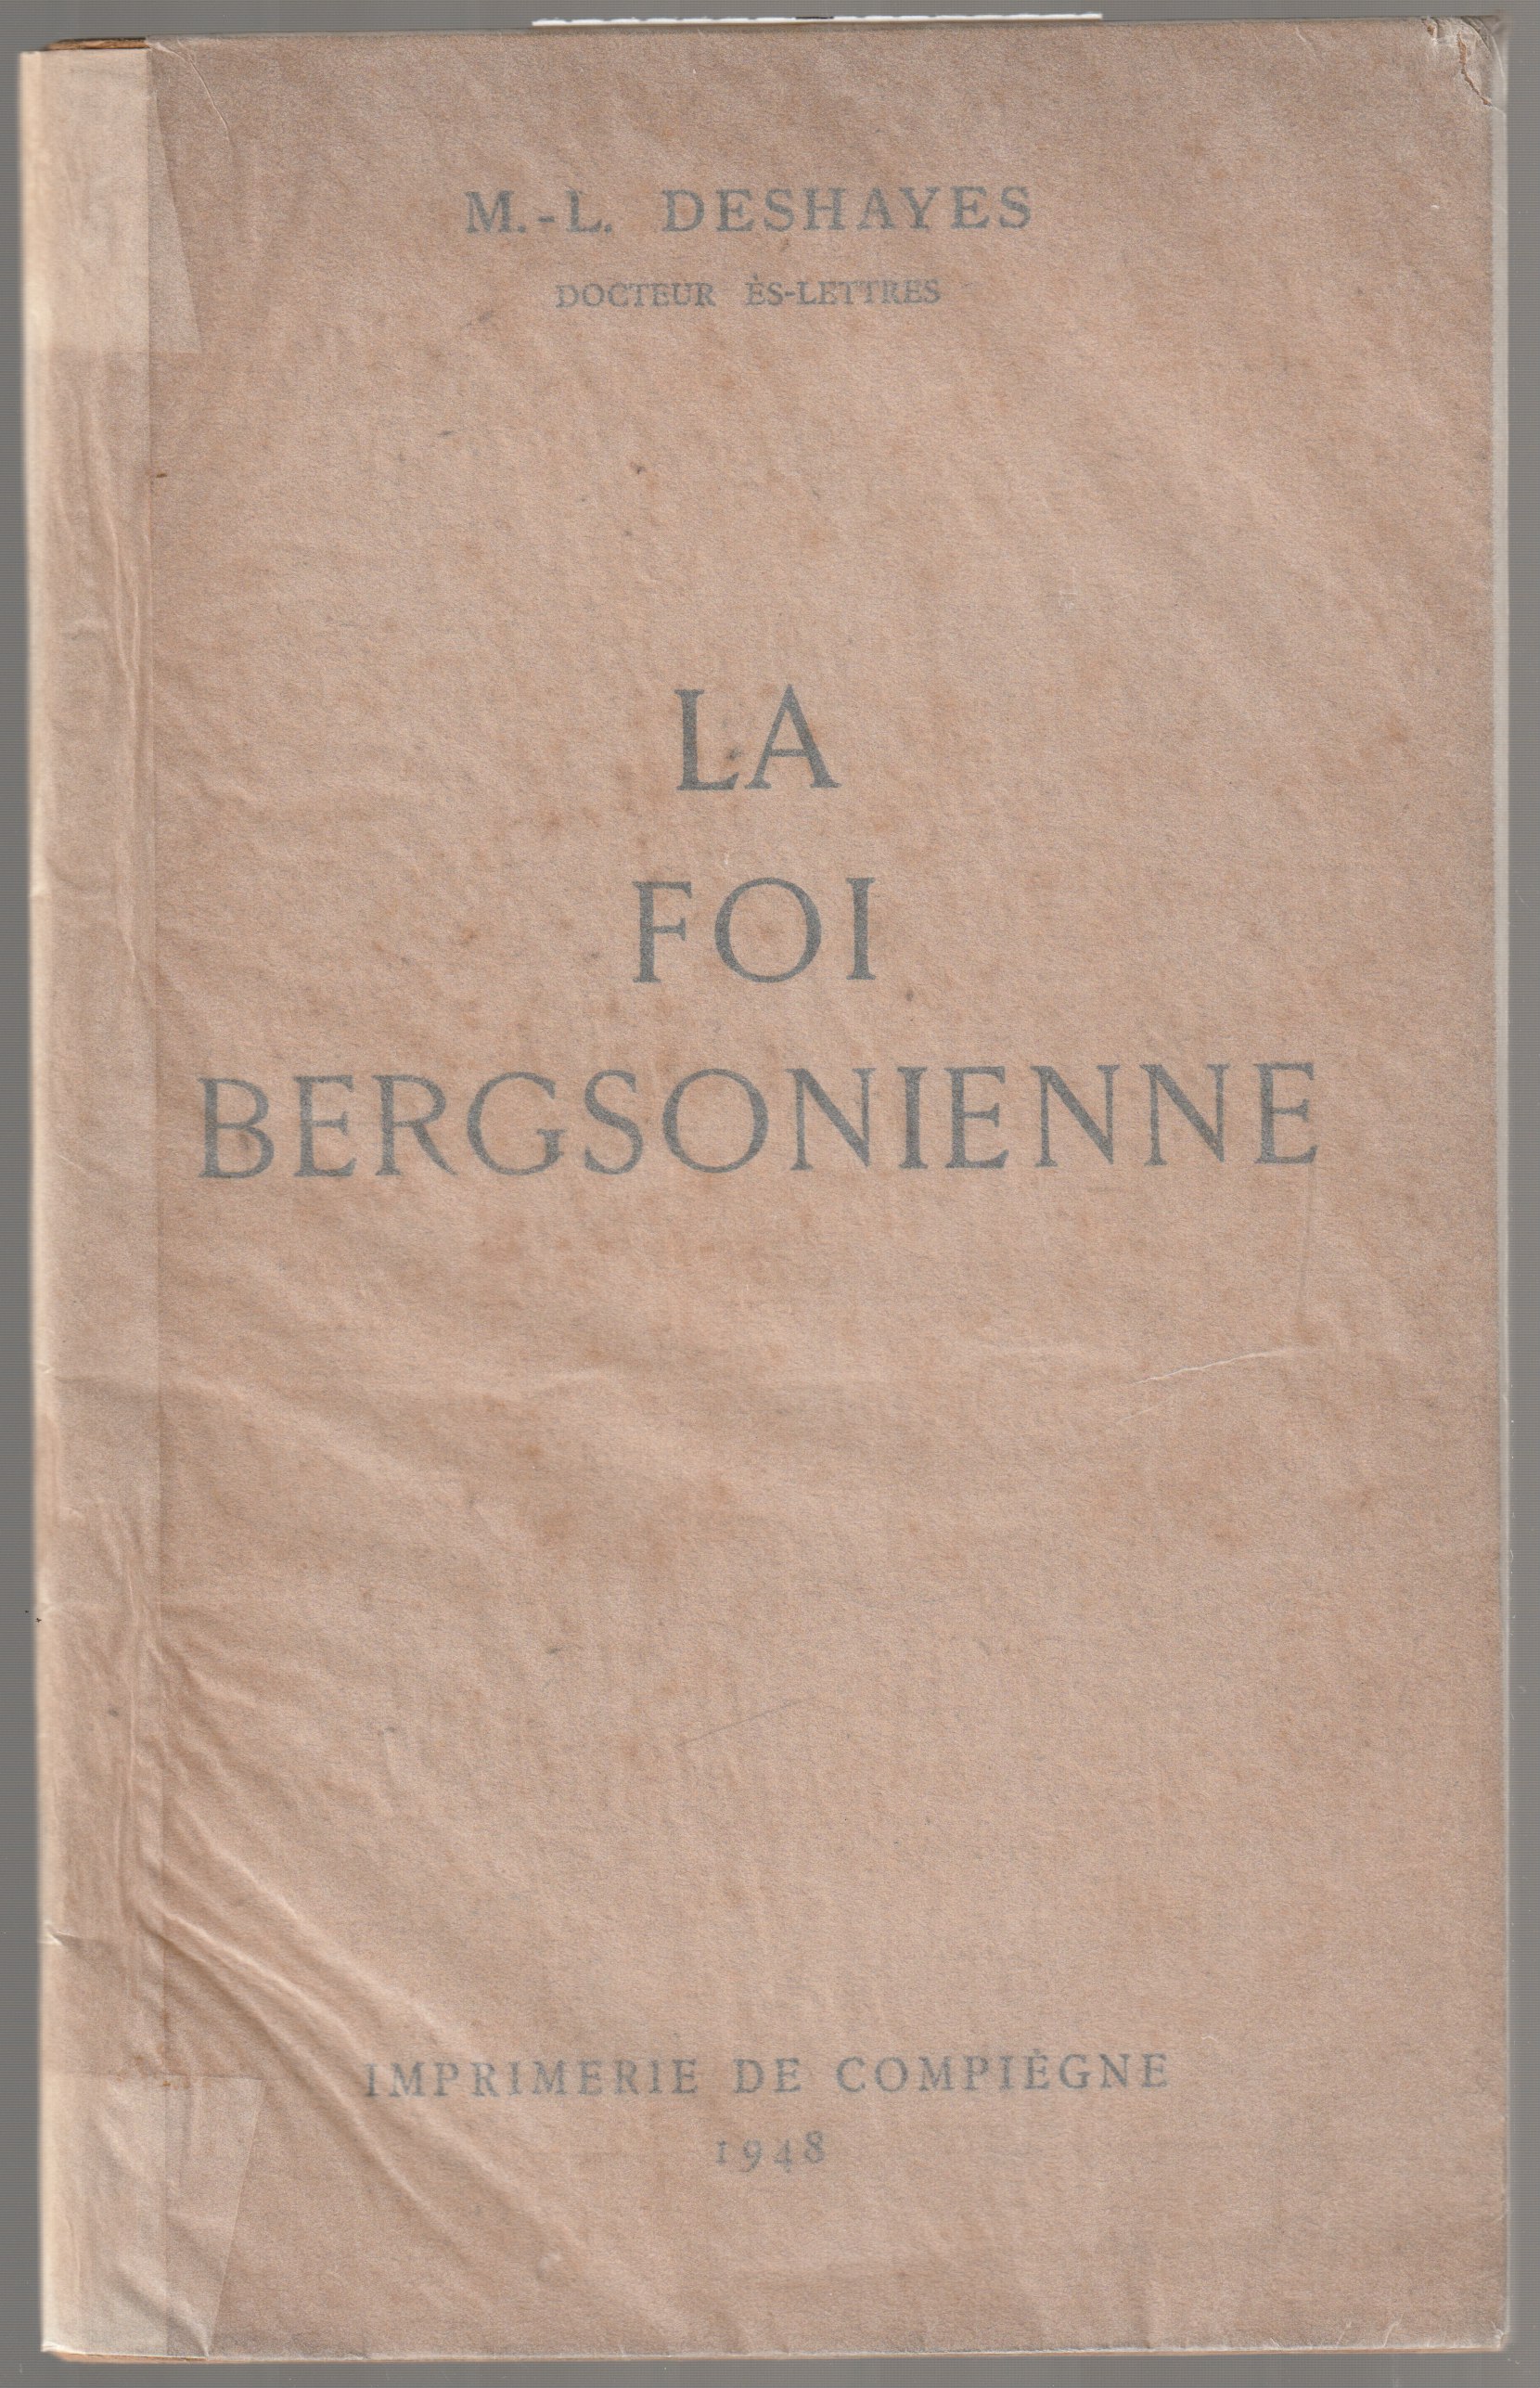 La Foi bergsonienne.